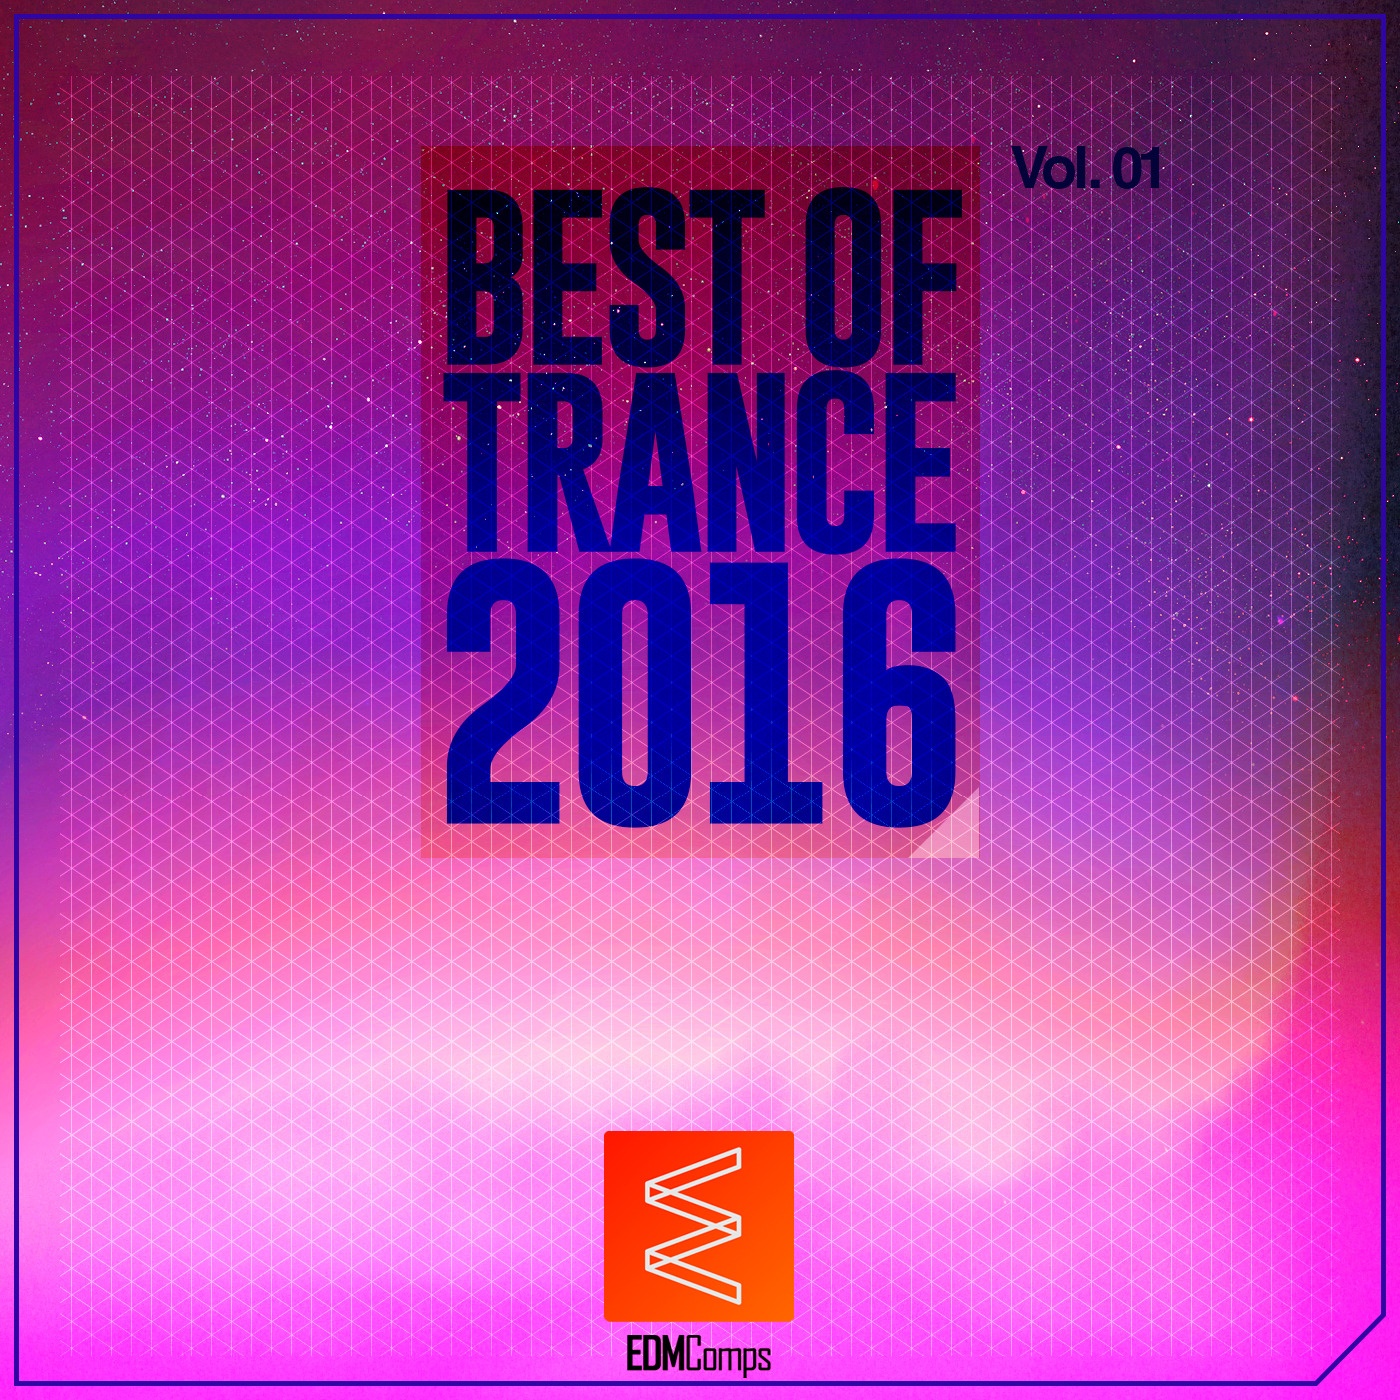 Best of Trance 2016, Vol. 01